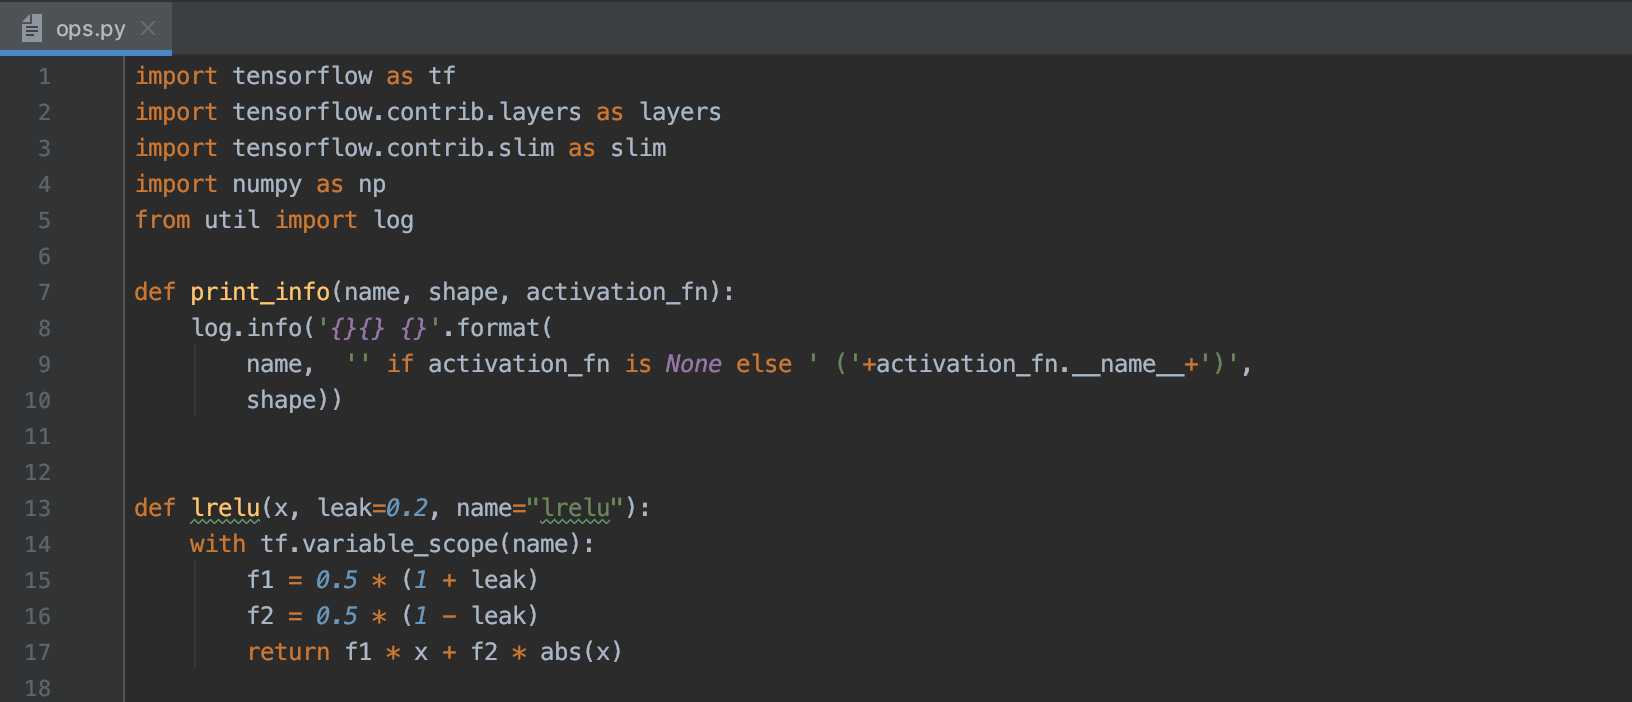 phpstorm python syntax highlighting